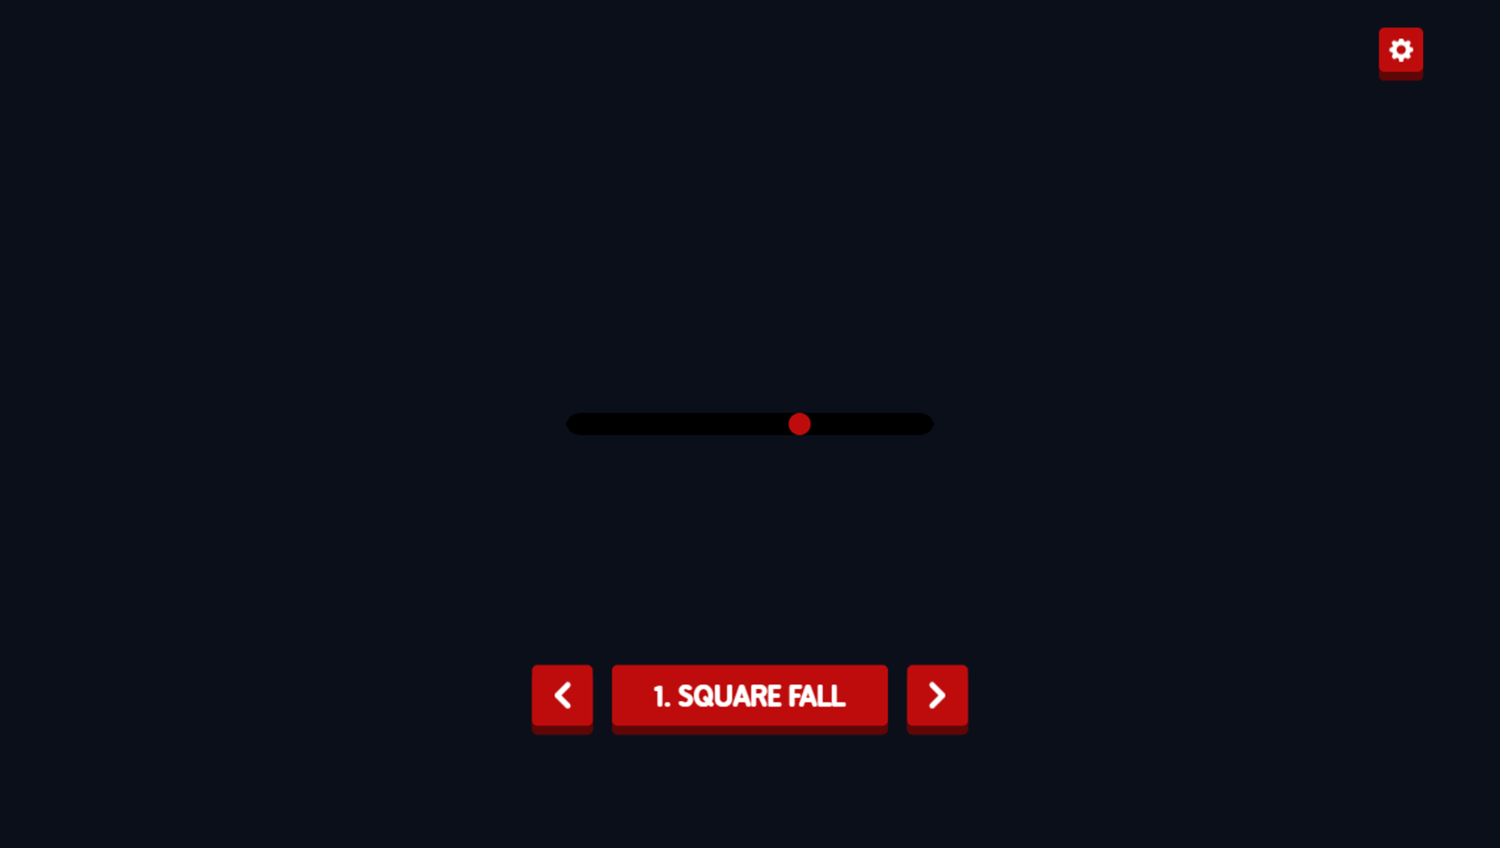 Mini Games Game 1 Square Fall Screenshot.